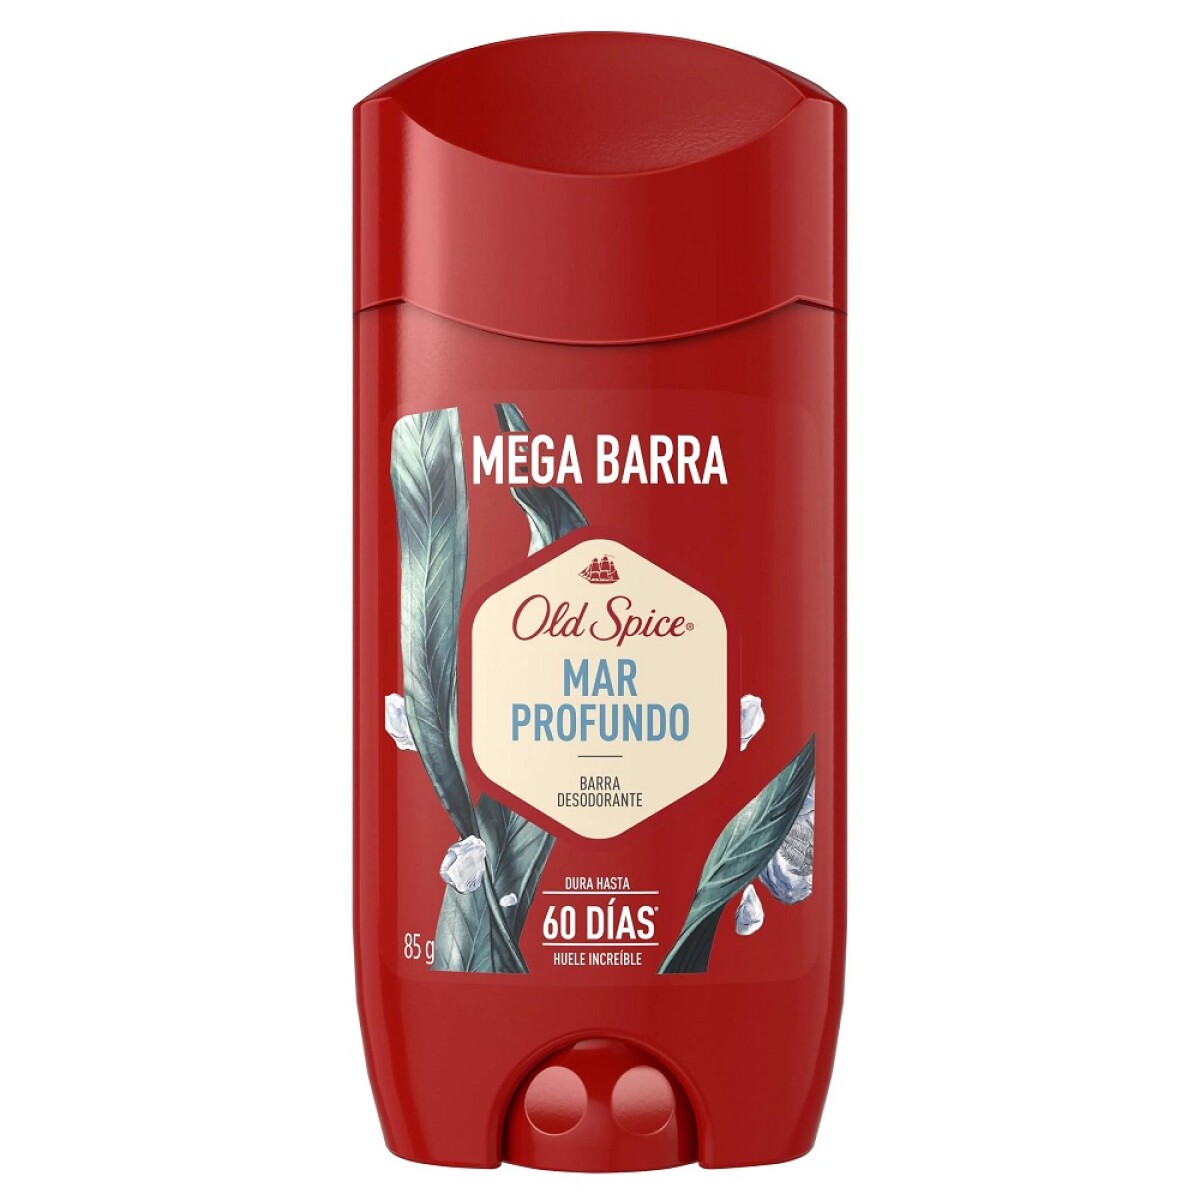 Desodorante En Barra Old Spice Mega Barra Mar Profundo 85 Grs 